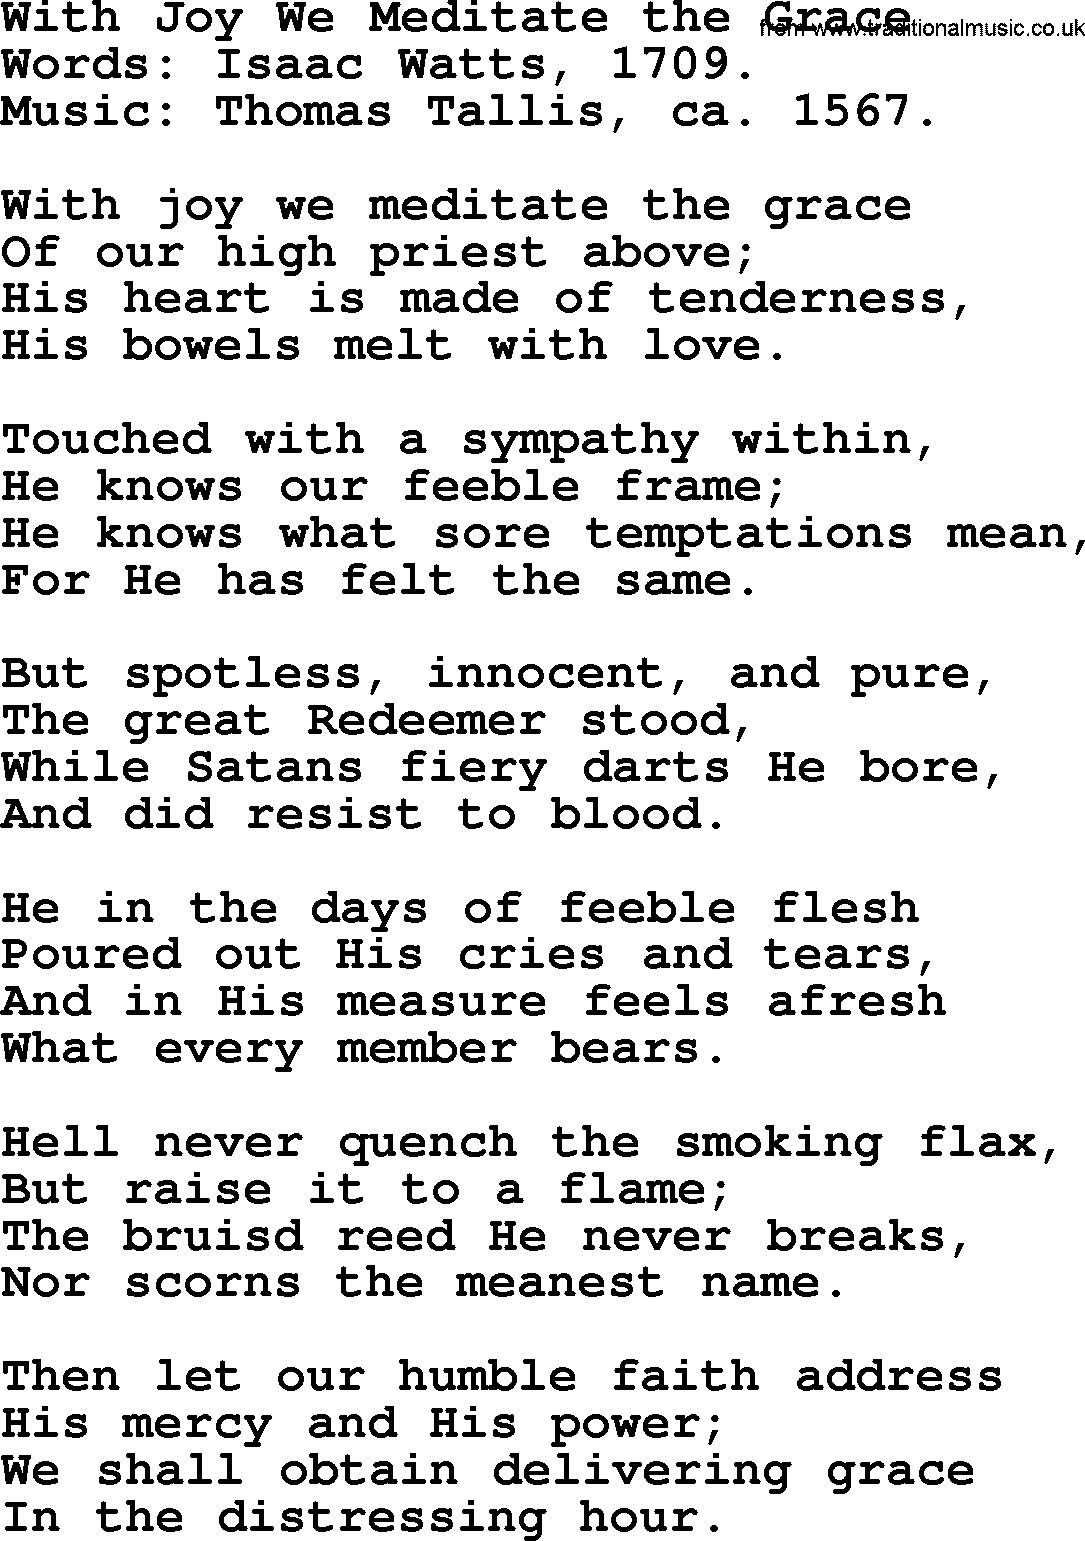 Isaac Watts Christian hymn: With Joy We Meditate the Grace- lyricss